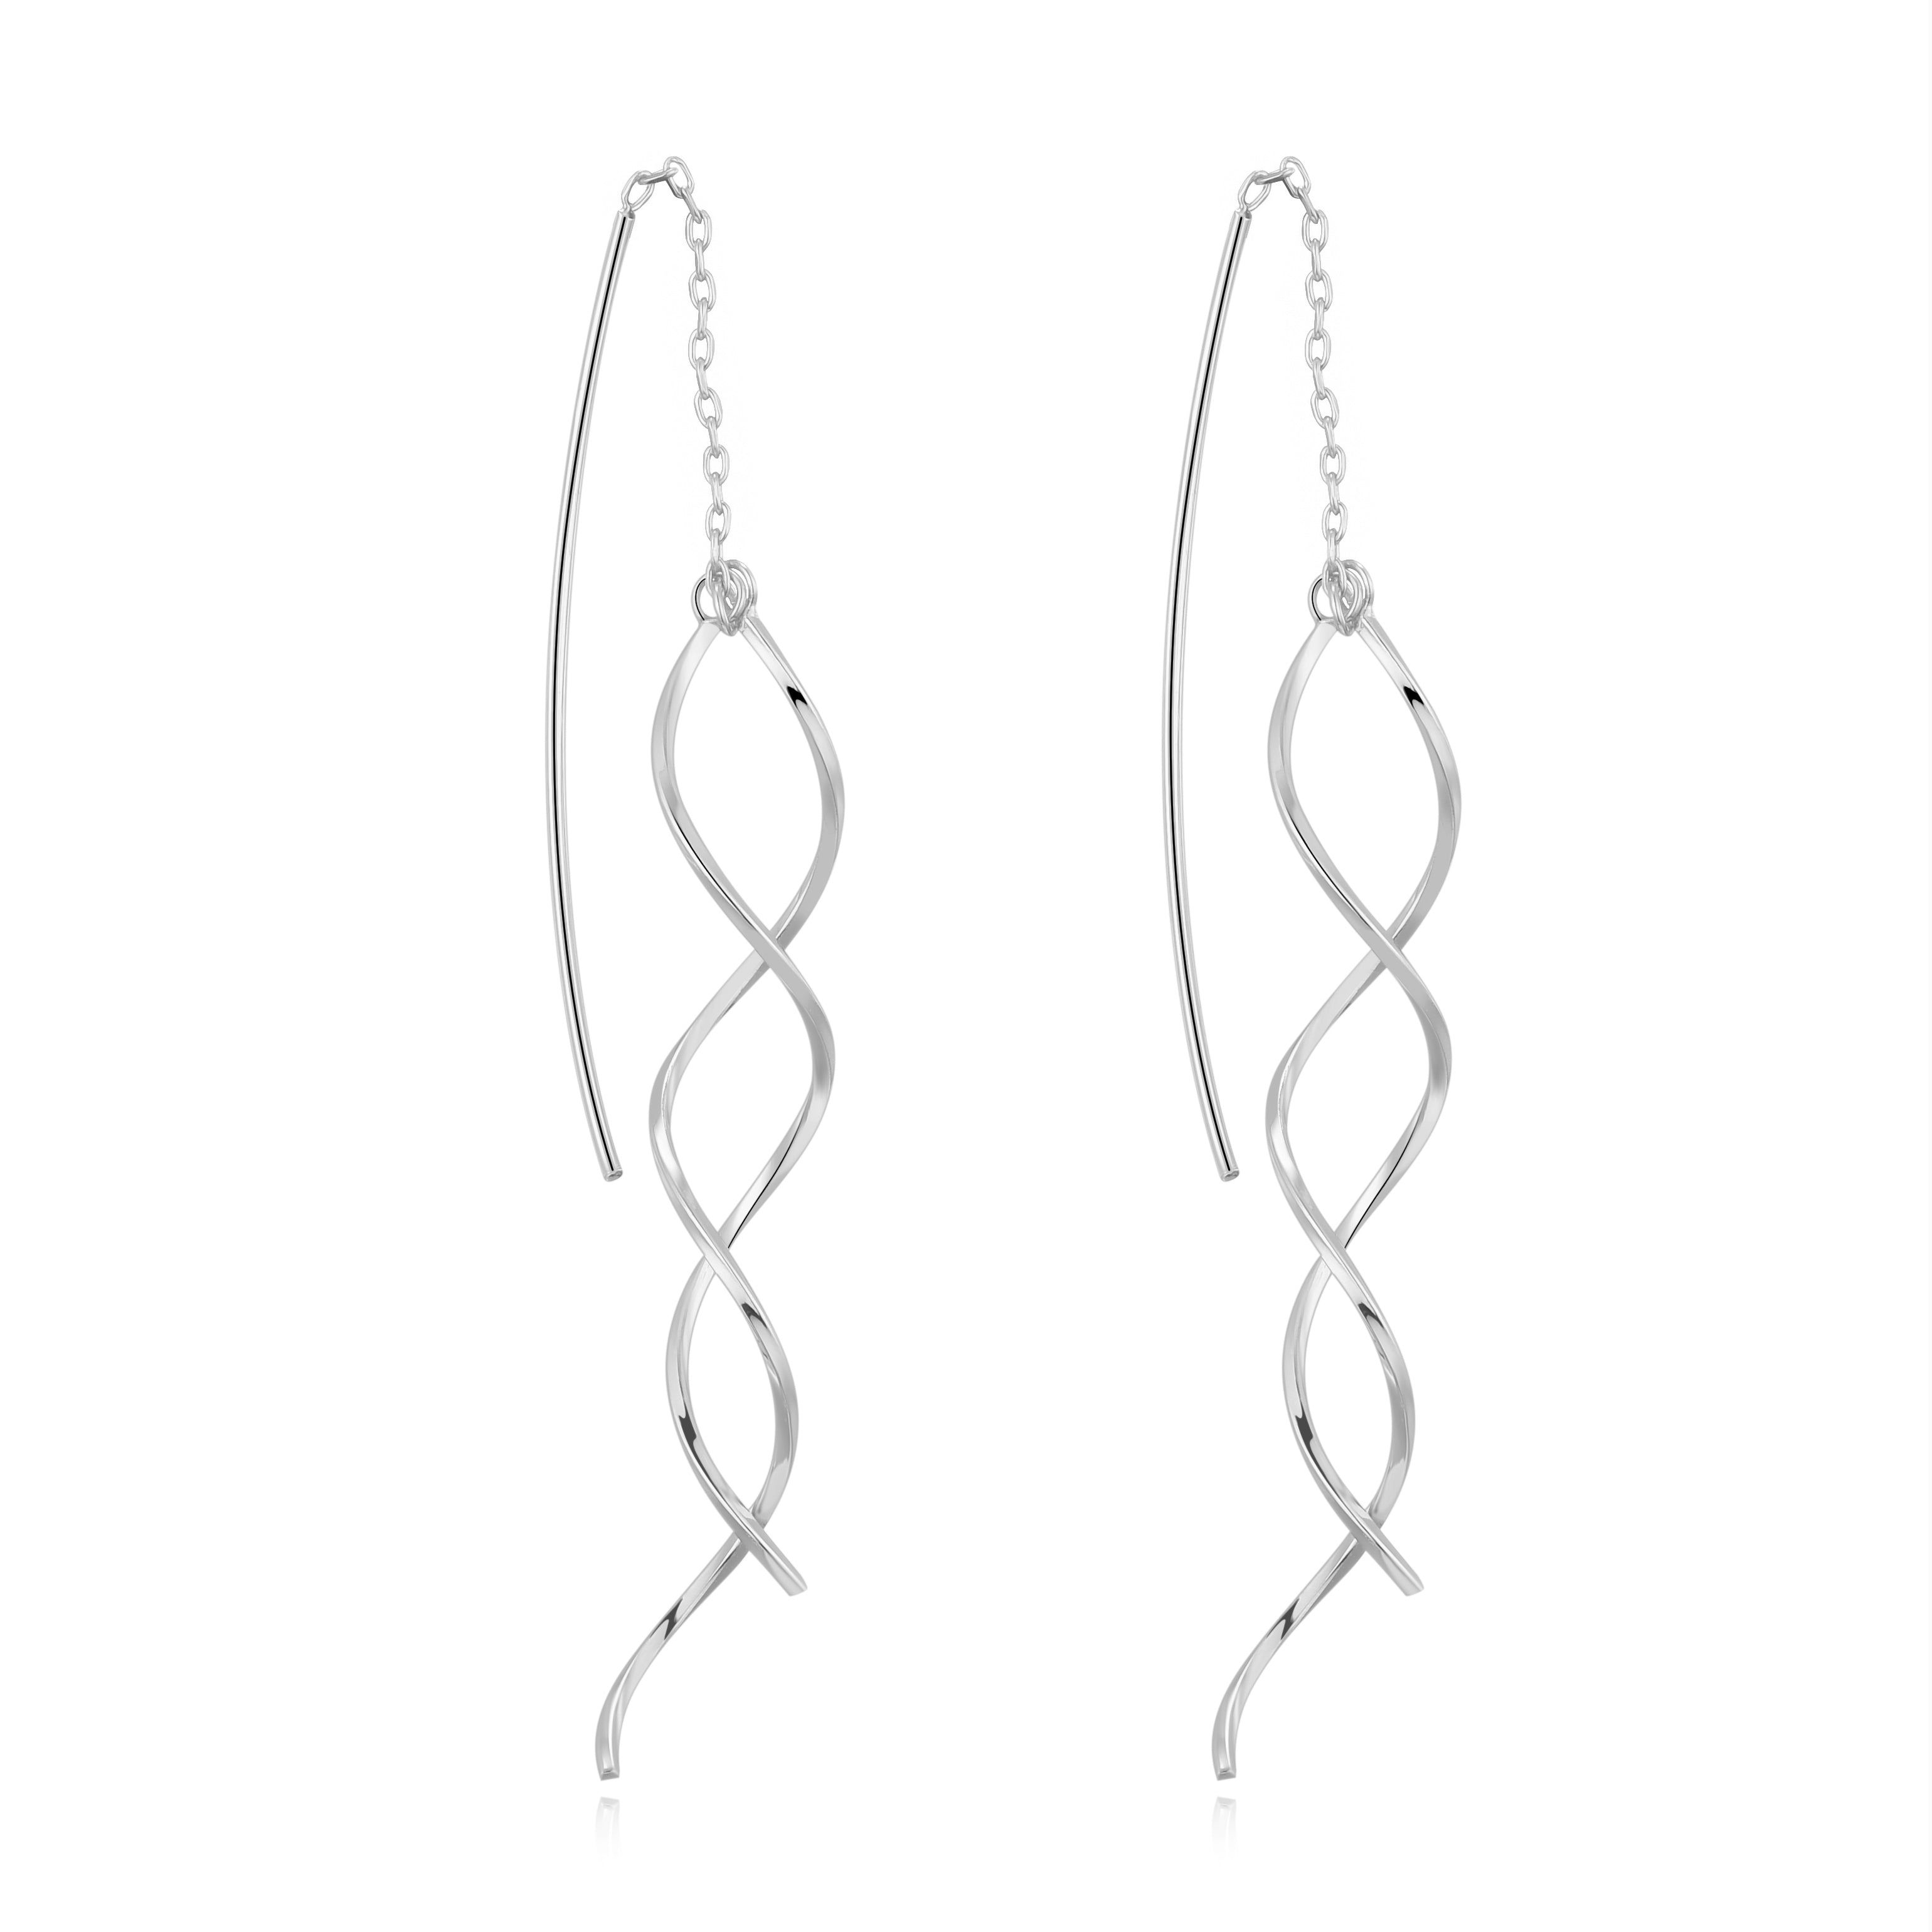 Silver Plated Spiral Thread Earrings by Philip Jones Jewellery